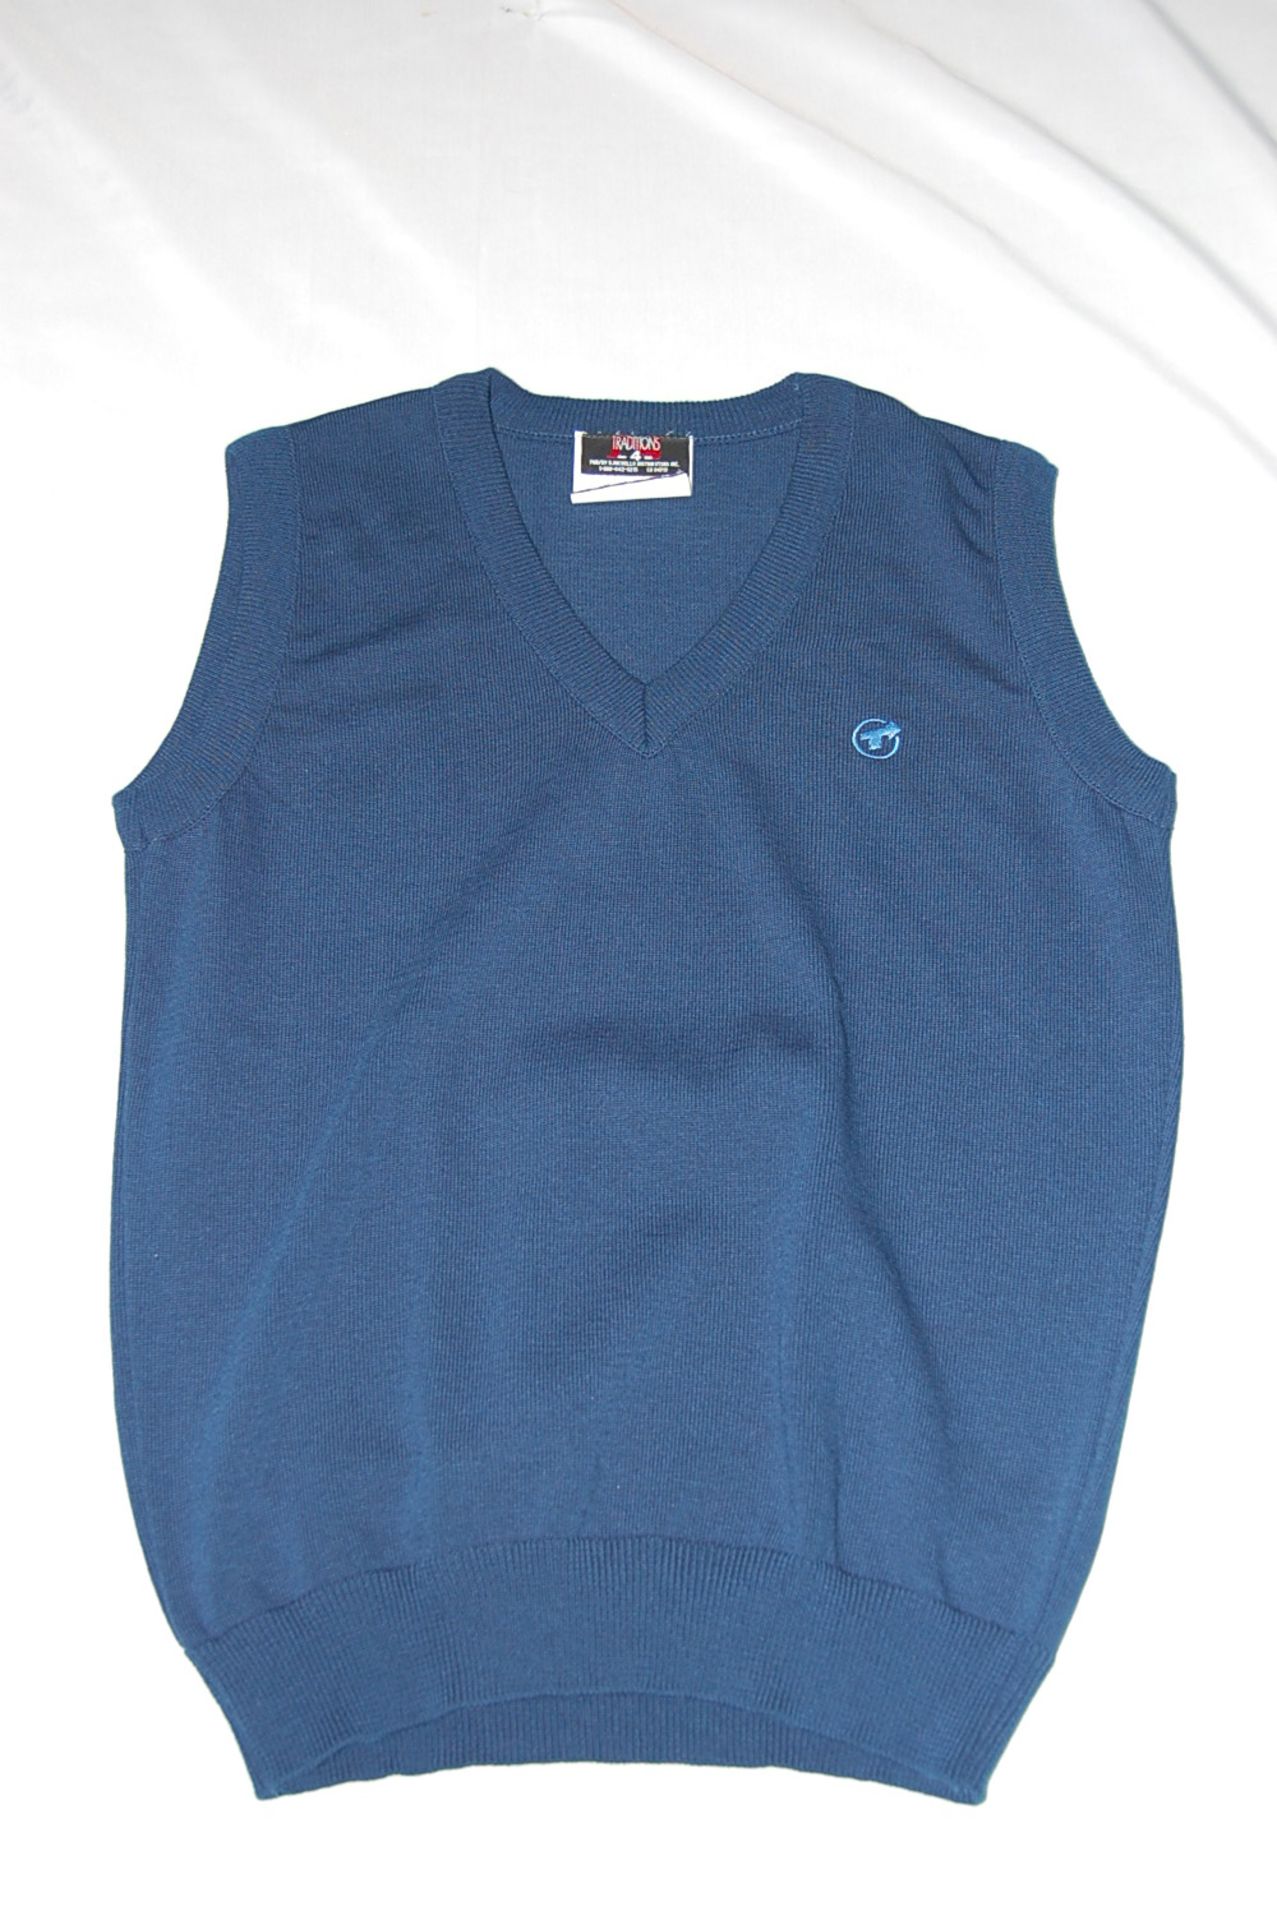 Blue Sleeveless Vest, Small